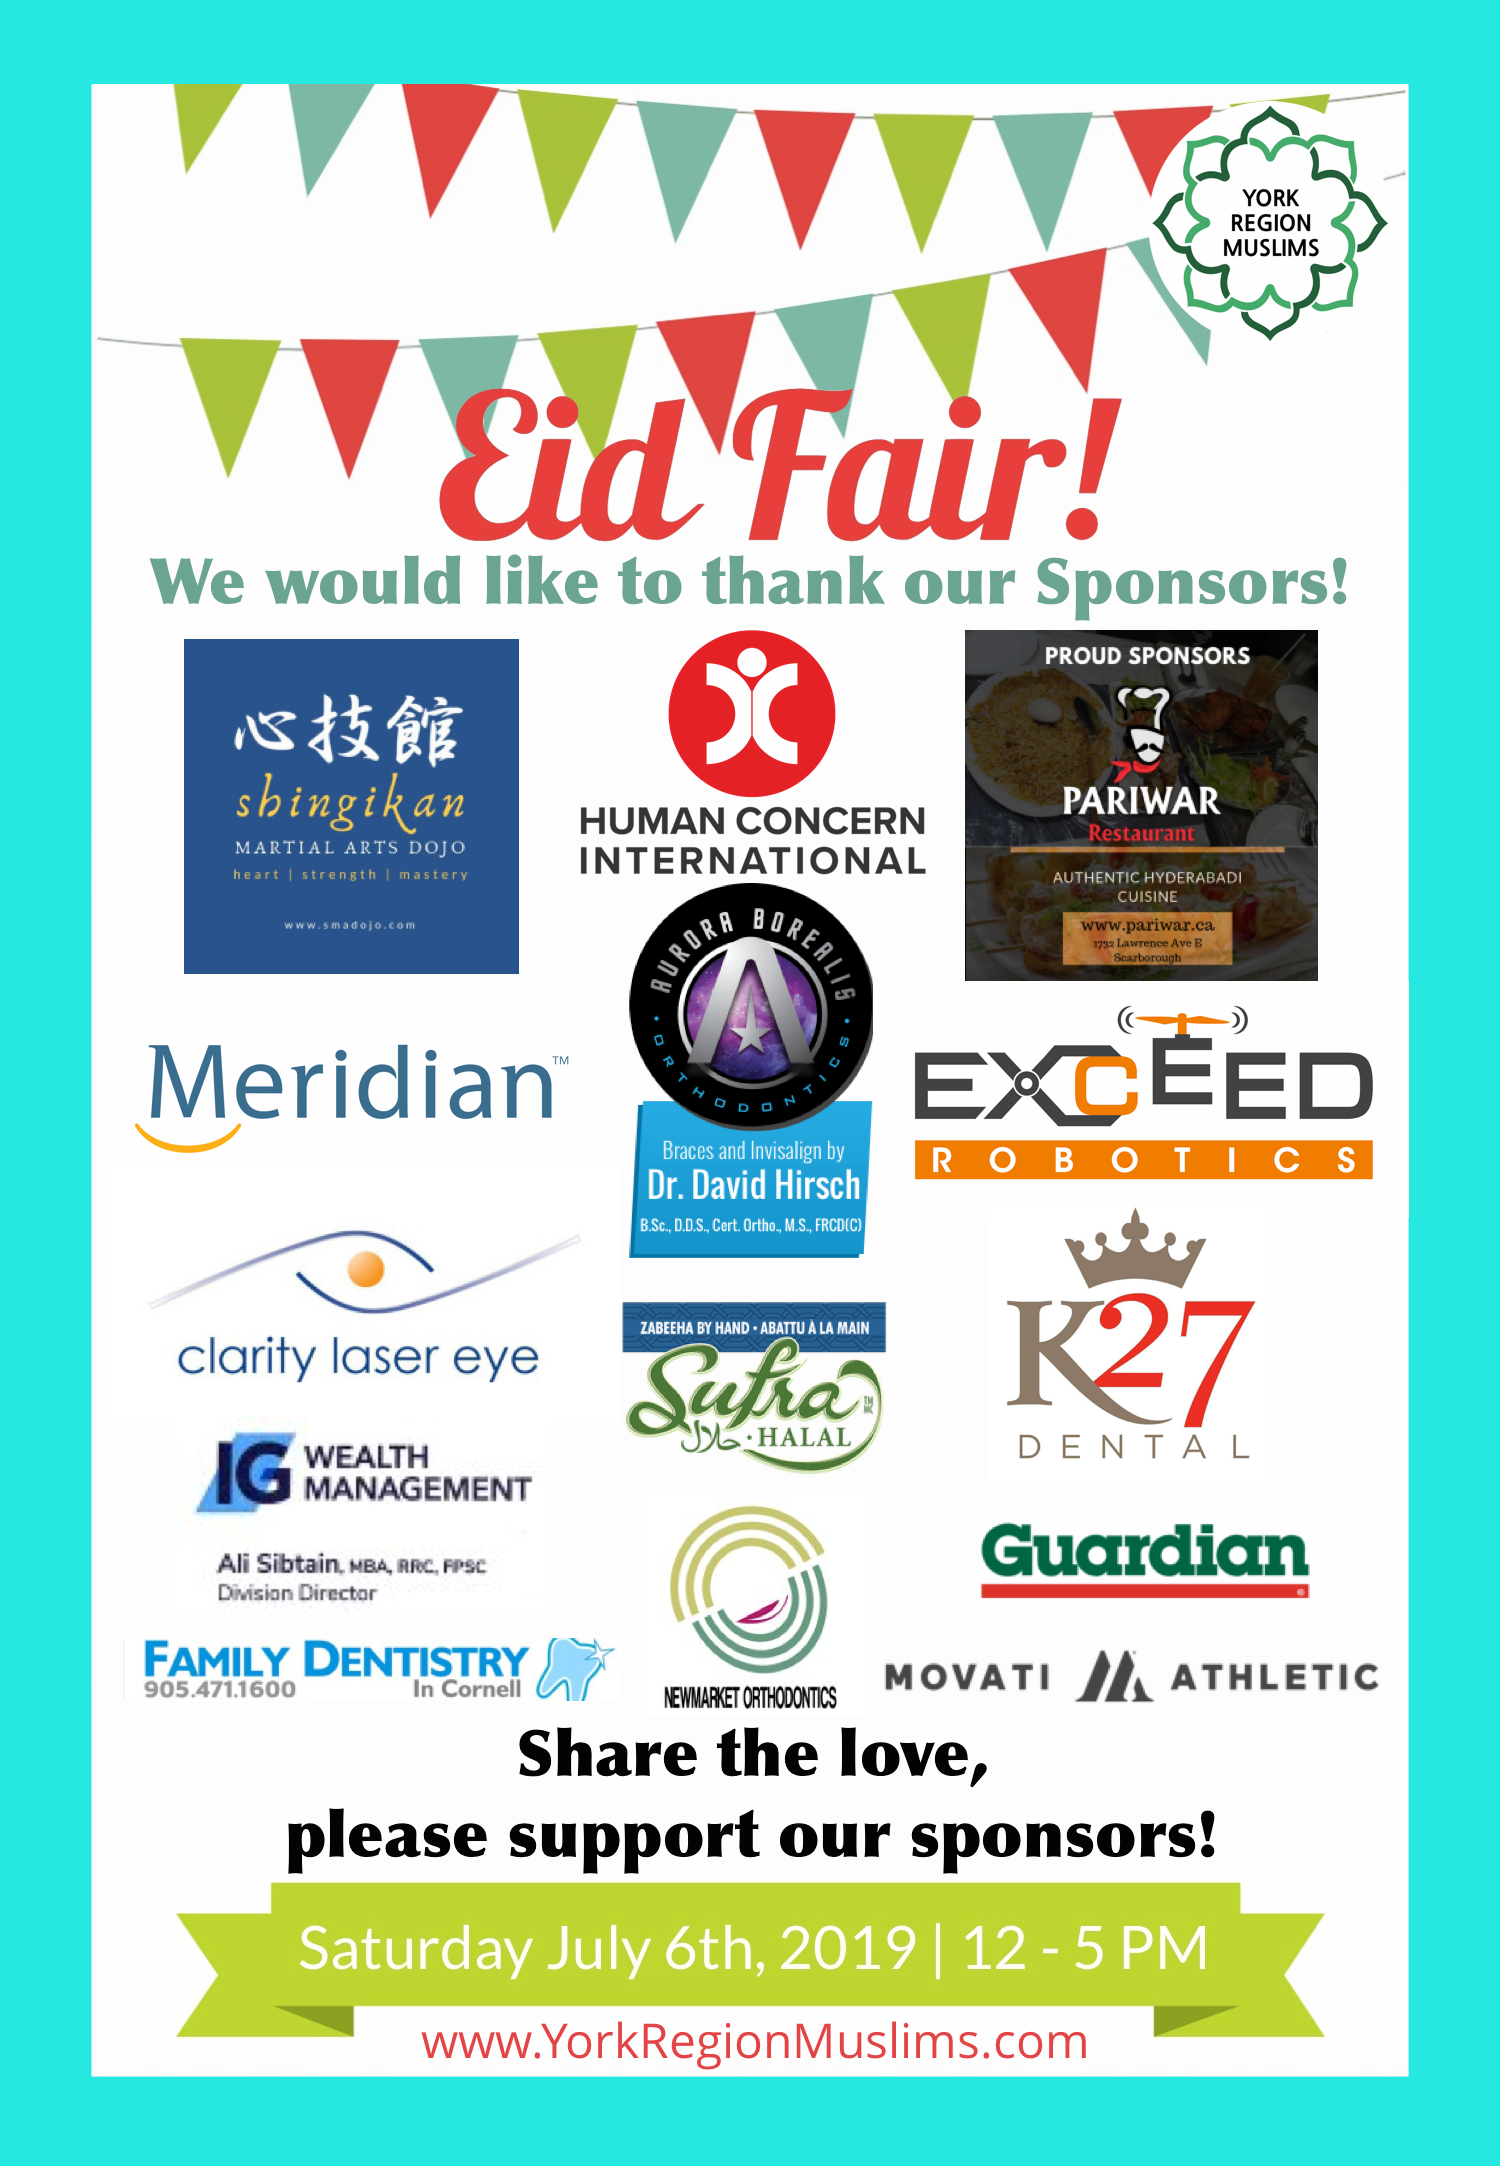 Eid Fair York Region Muslims